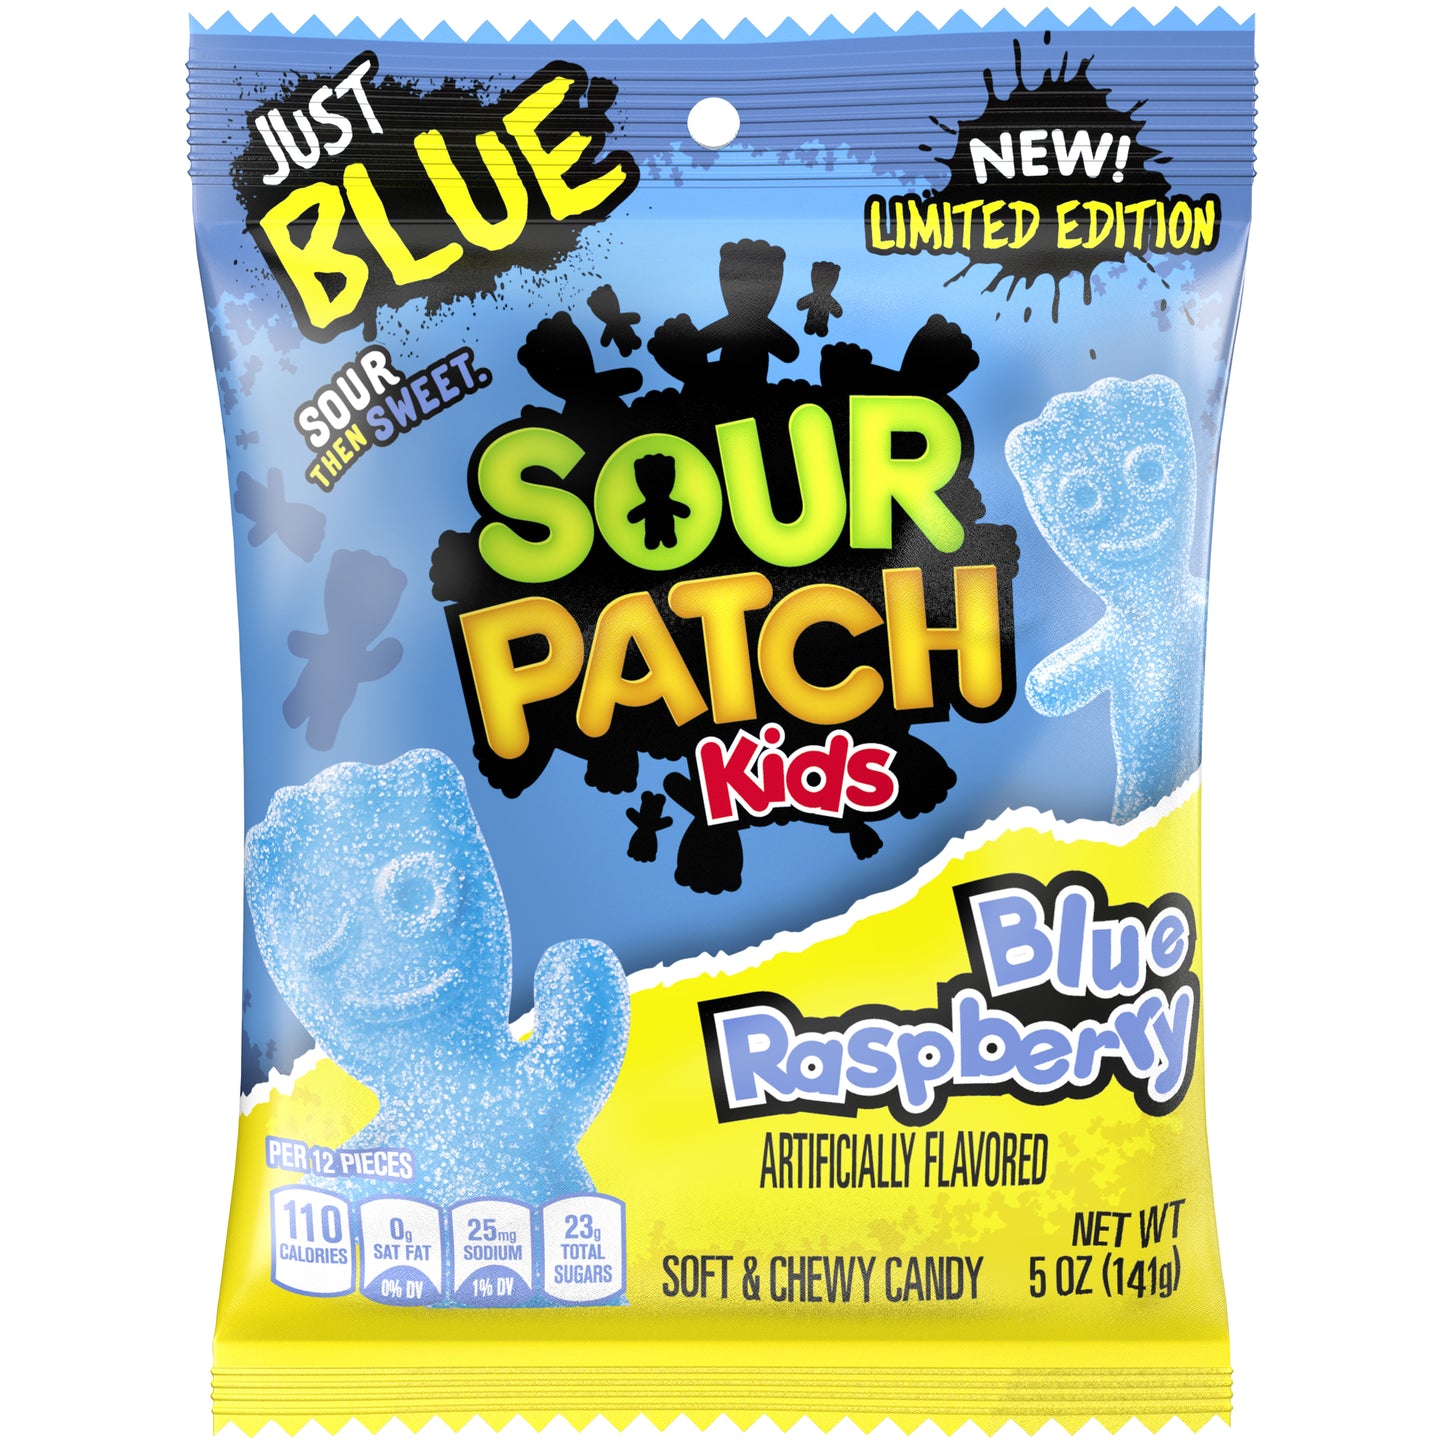 Sour Patch Blue Raspberry | 12 x 141g